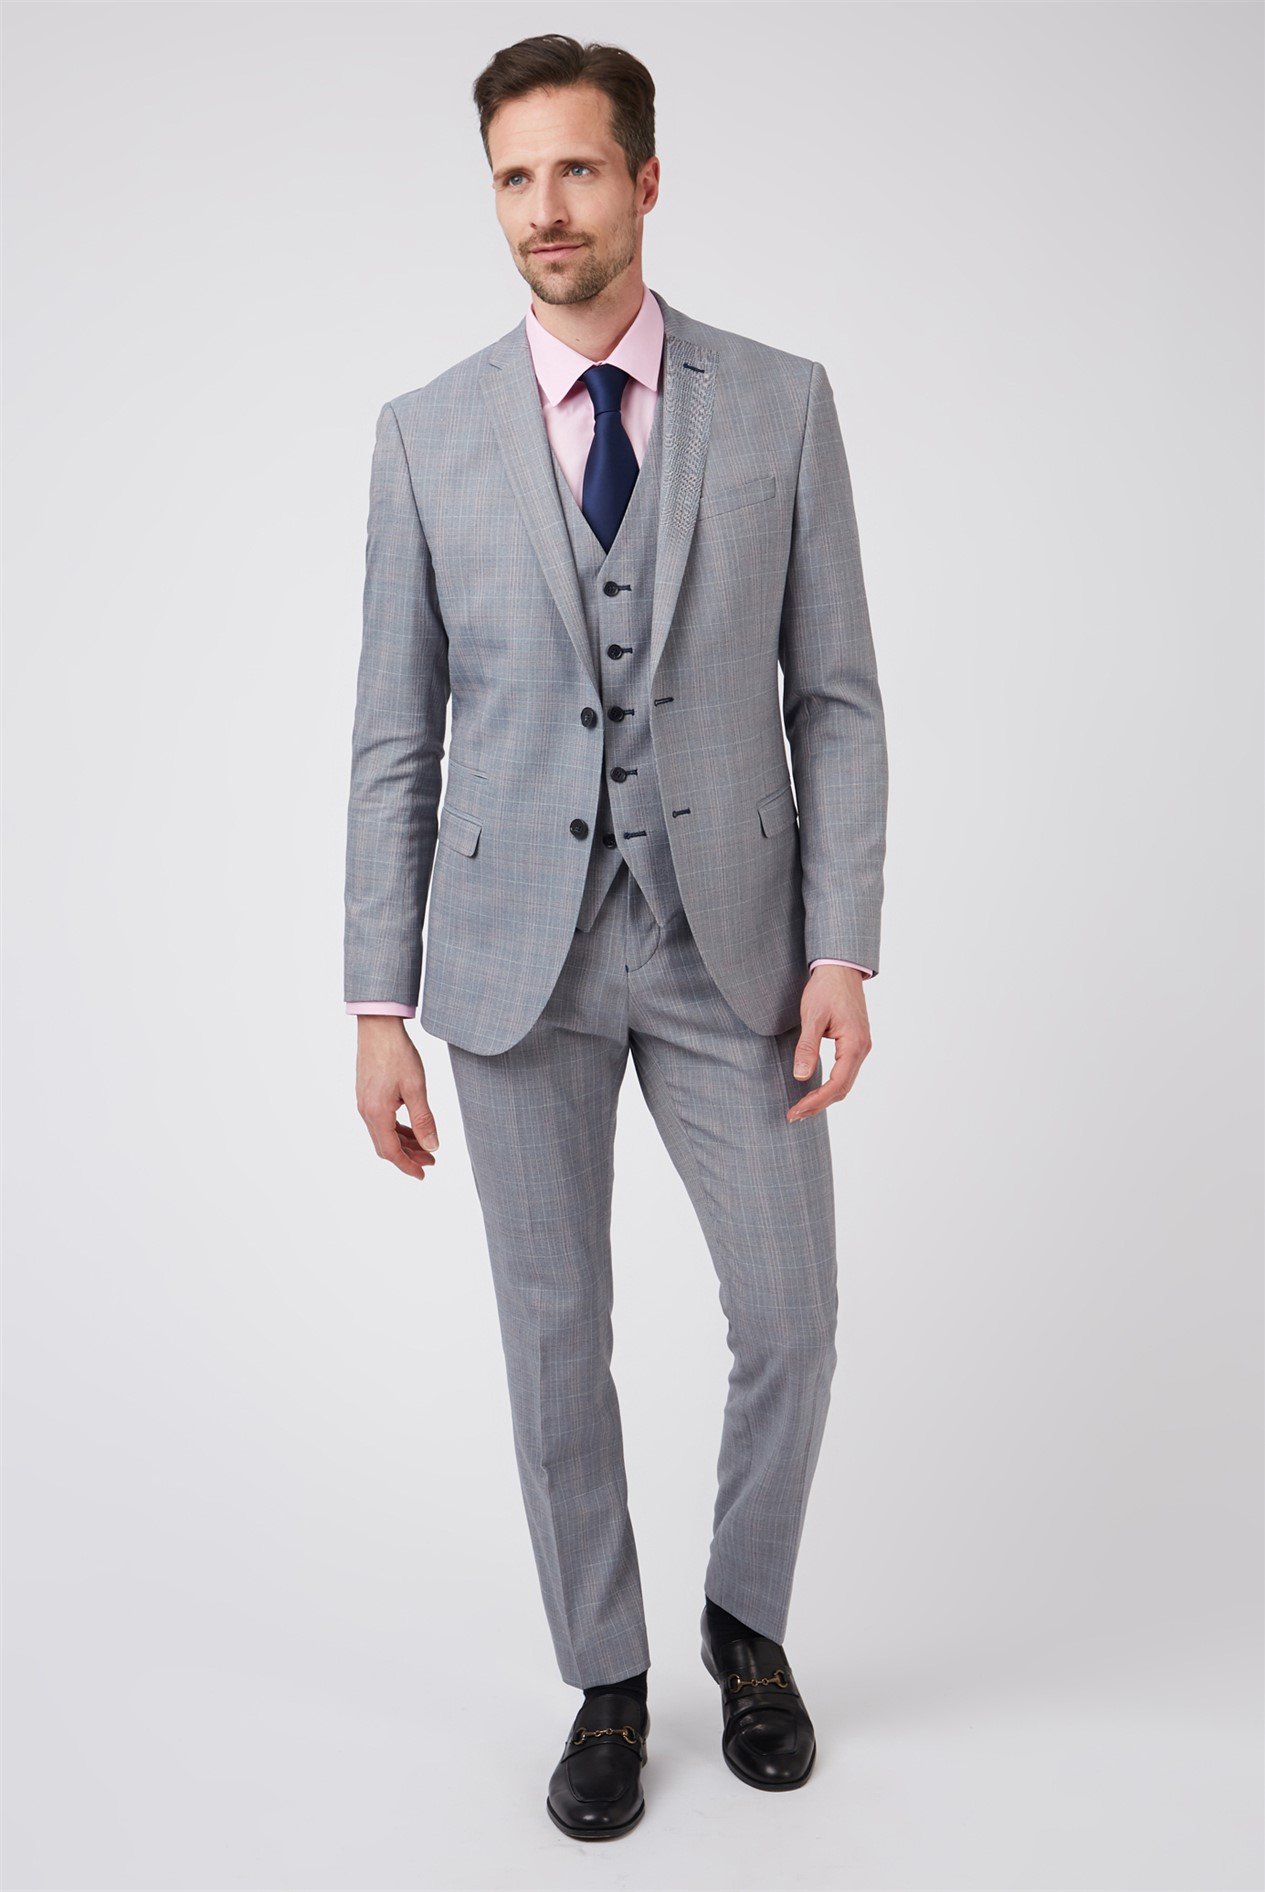 Buy Slim Fit Overcheck Suit in India